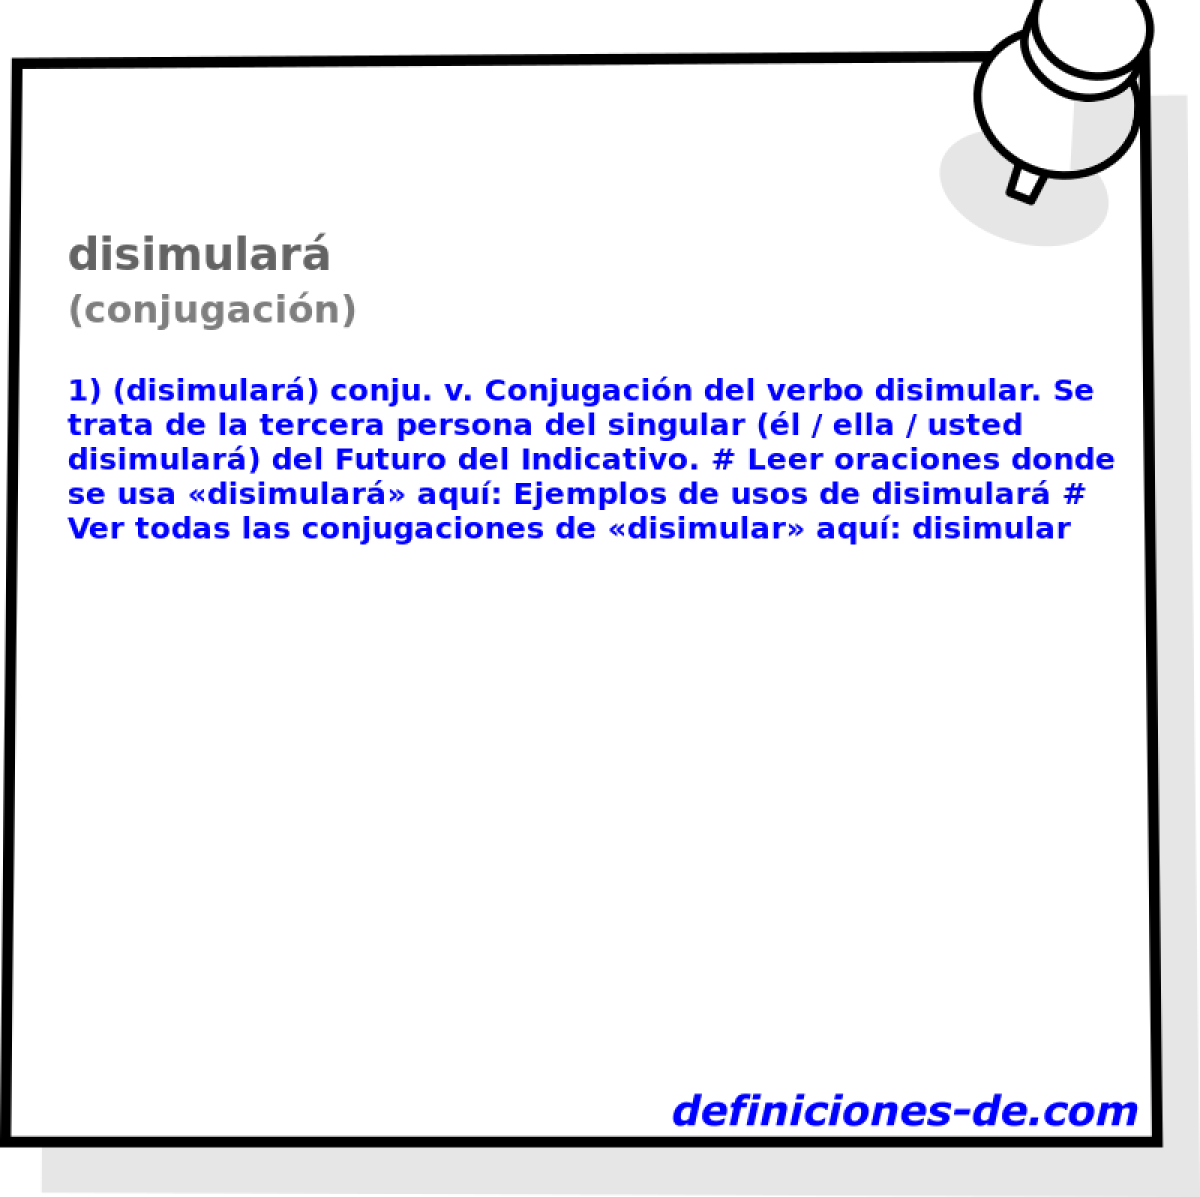 disimular (conjugacin)